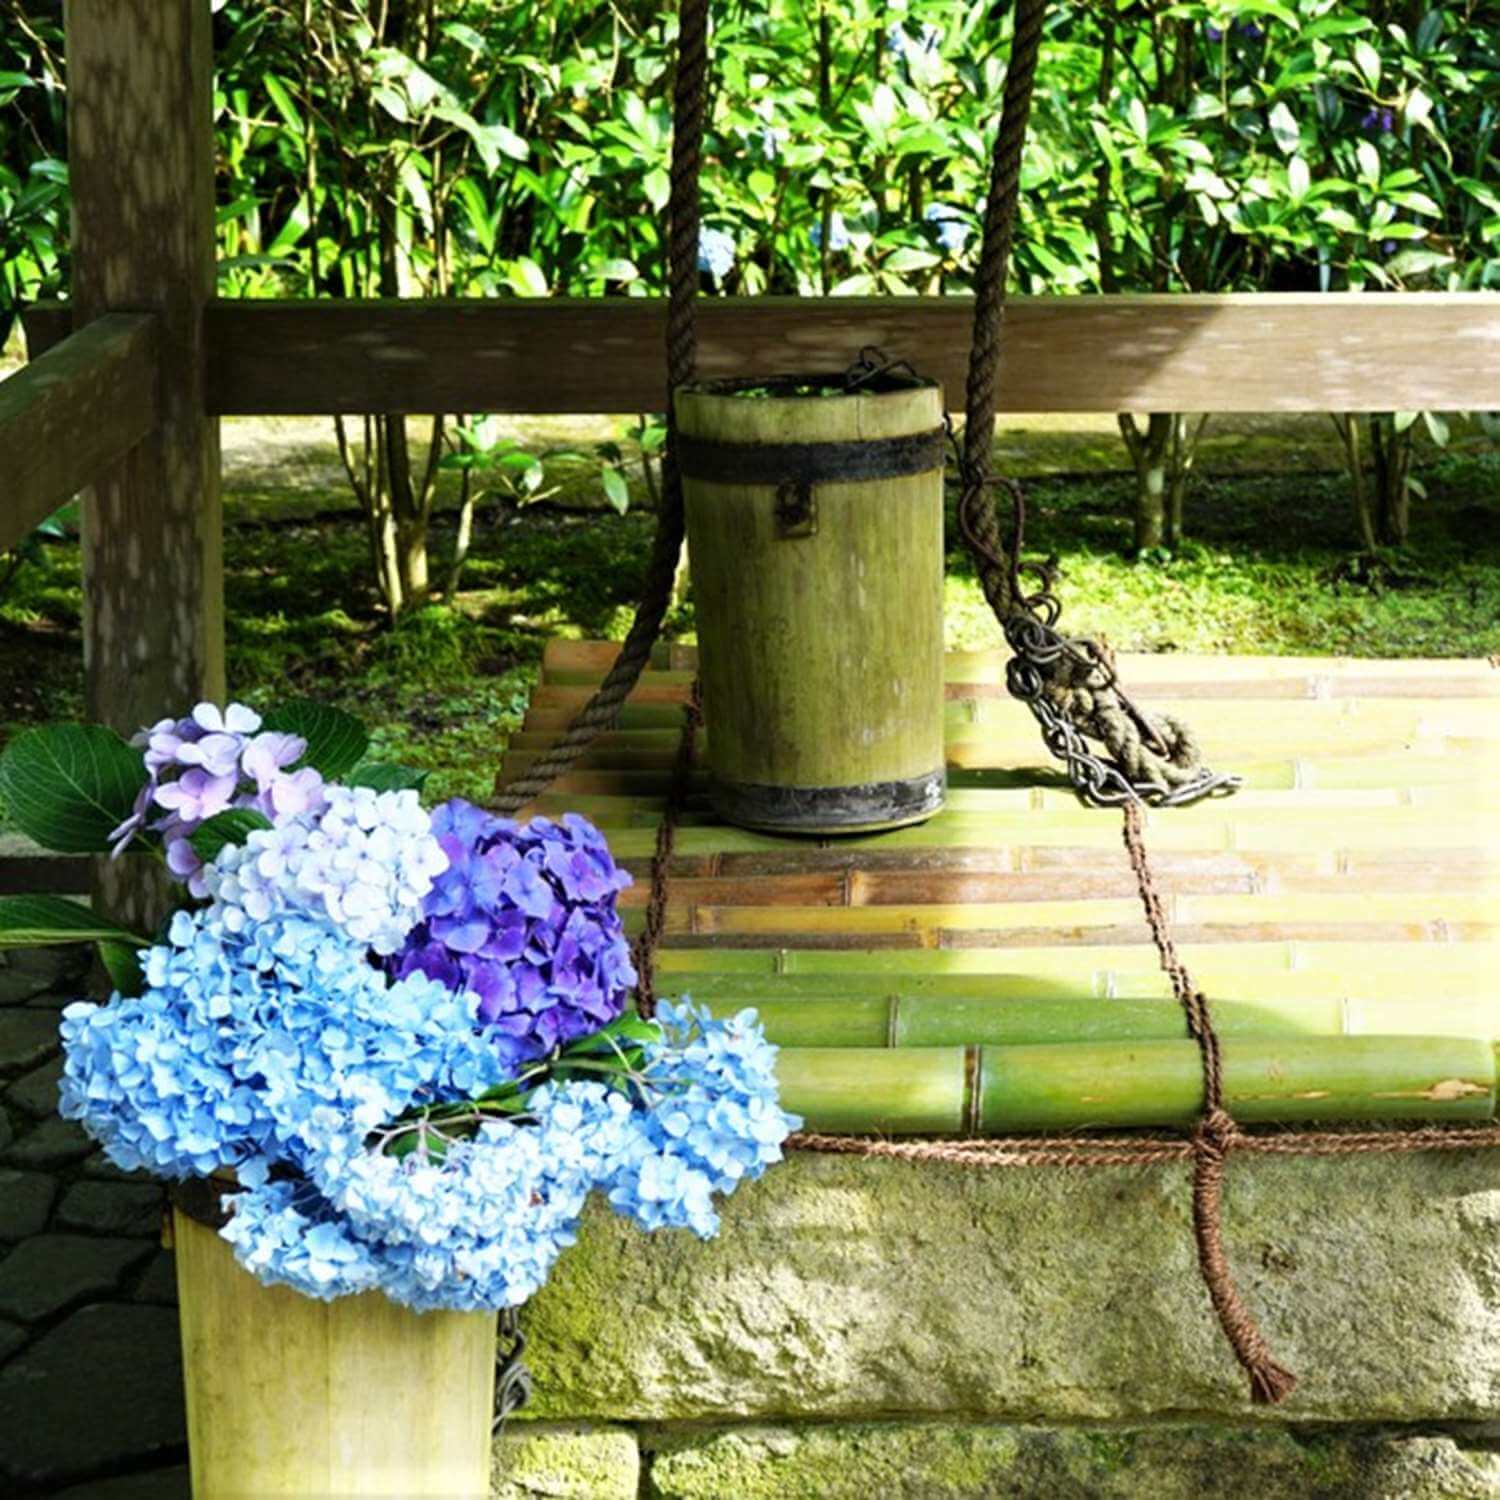 Hydrangeas beautifully blooming during the rainy season = Shutterstock 5